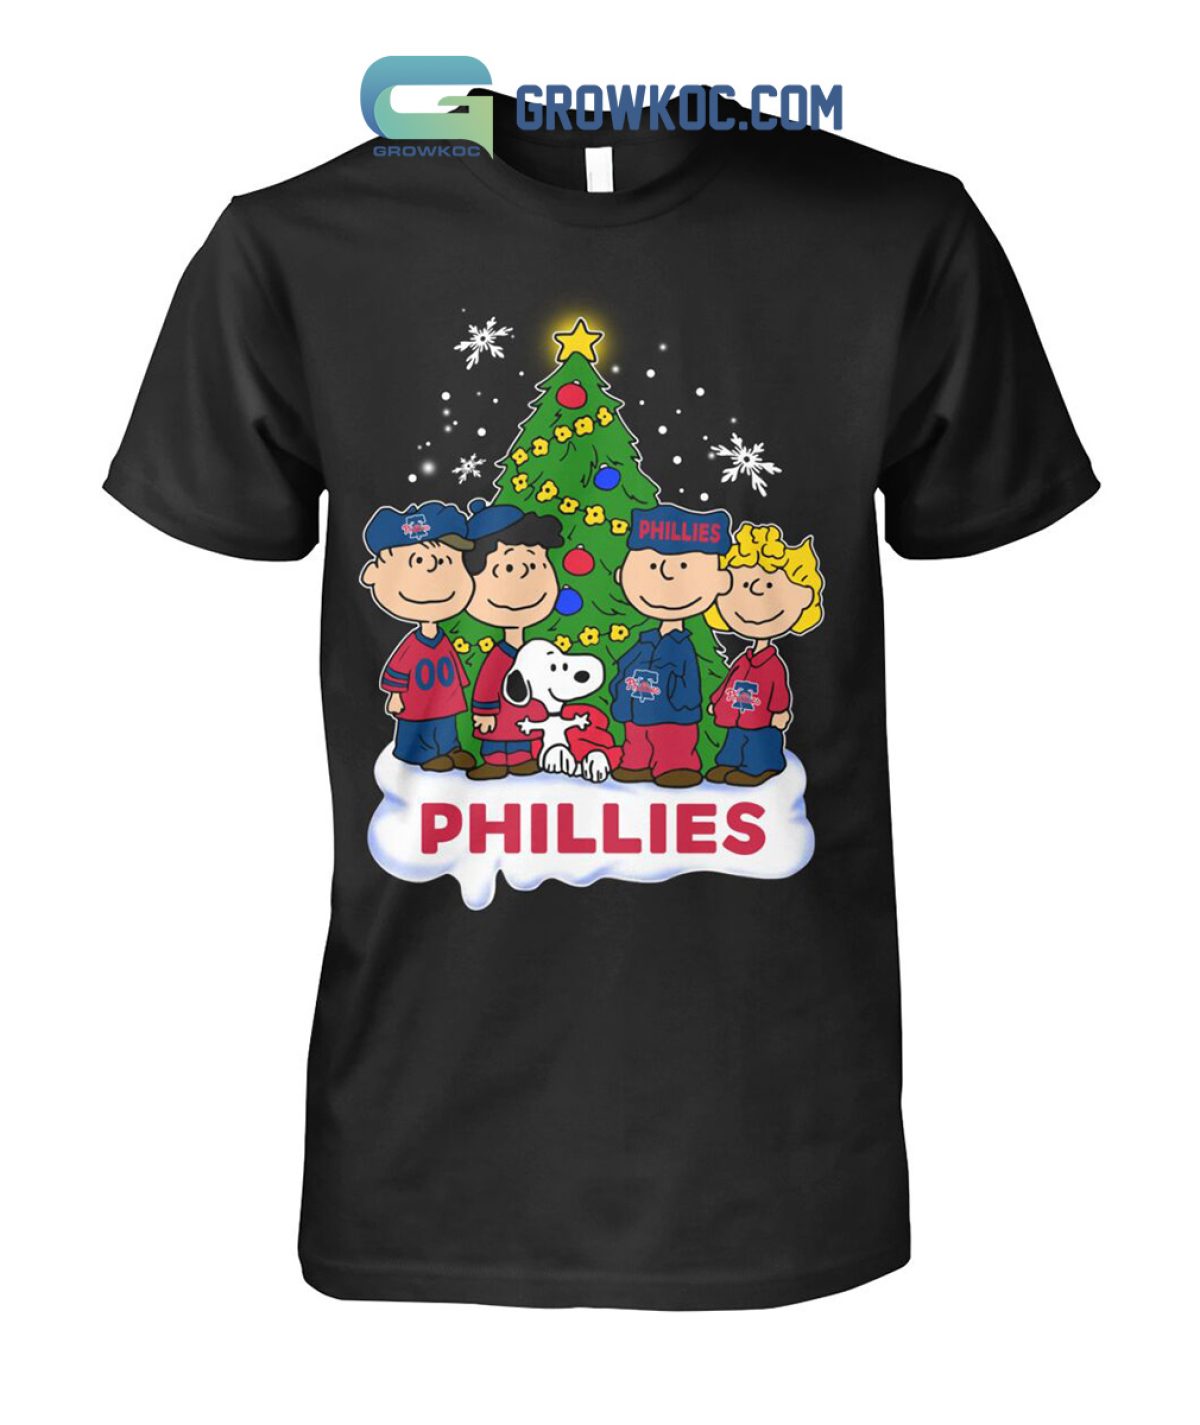 Philadelphia Phillies Championship World Series For Charlie shirt, hoodie,  sweater, long sleeve and tank top